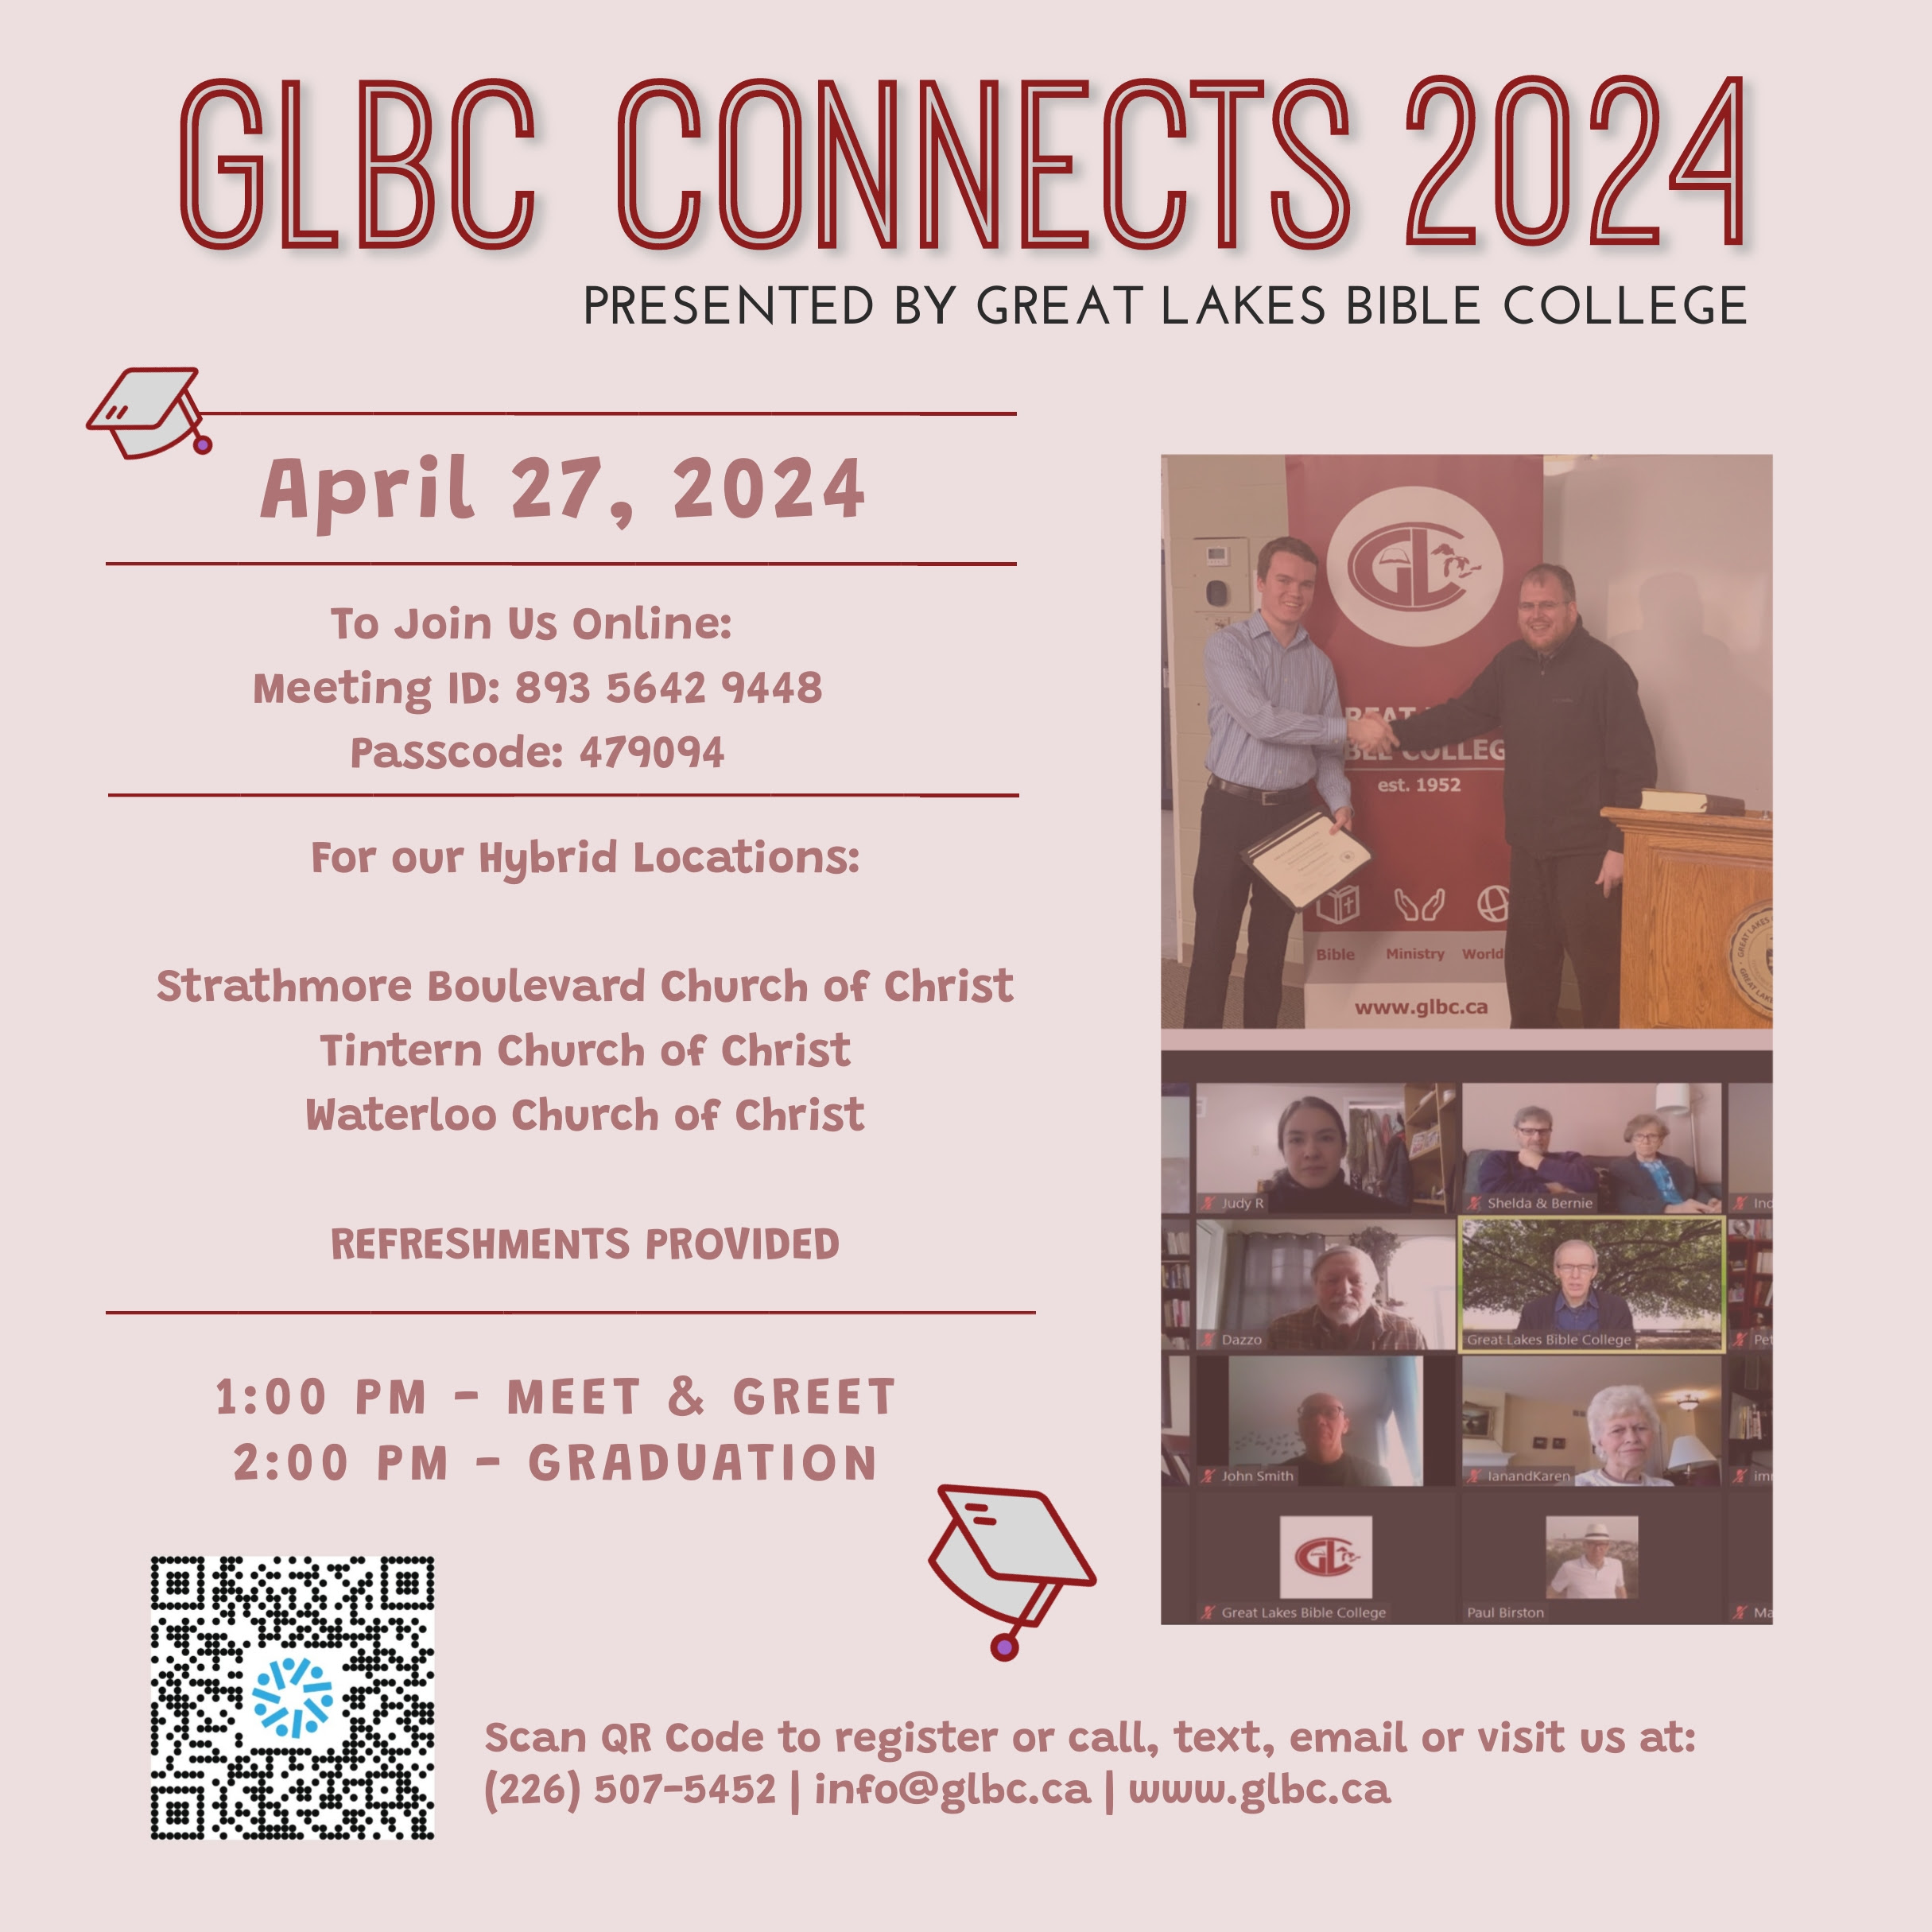 2024-glbc-connect-grad-image-updated.jpg